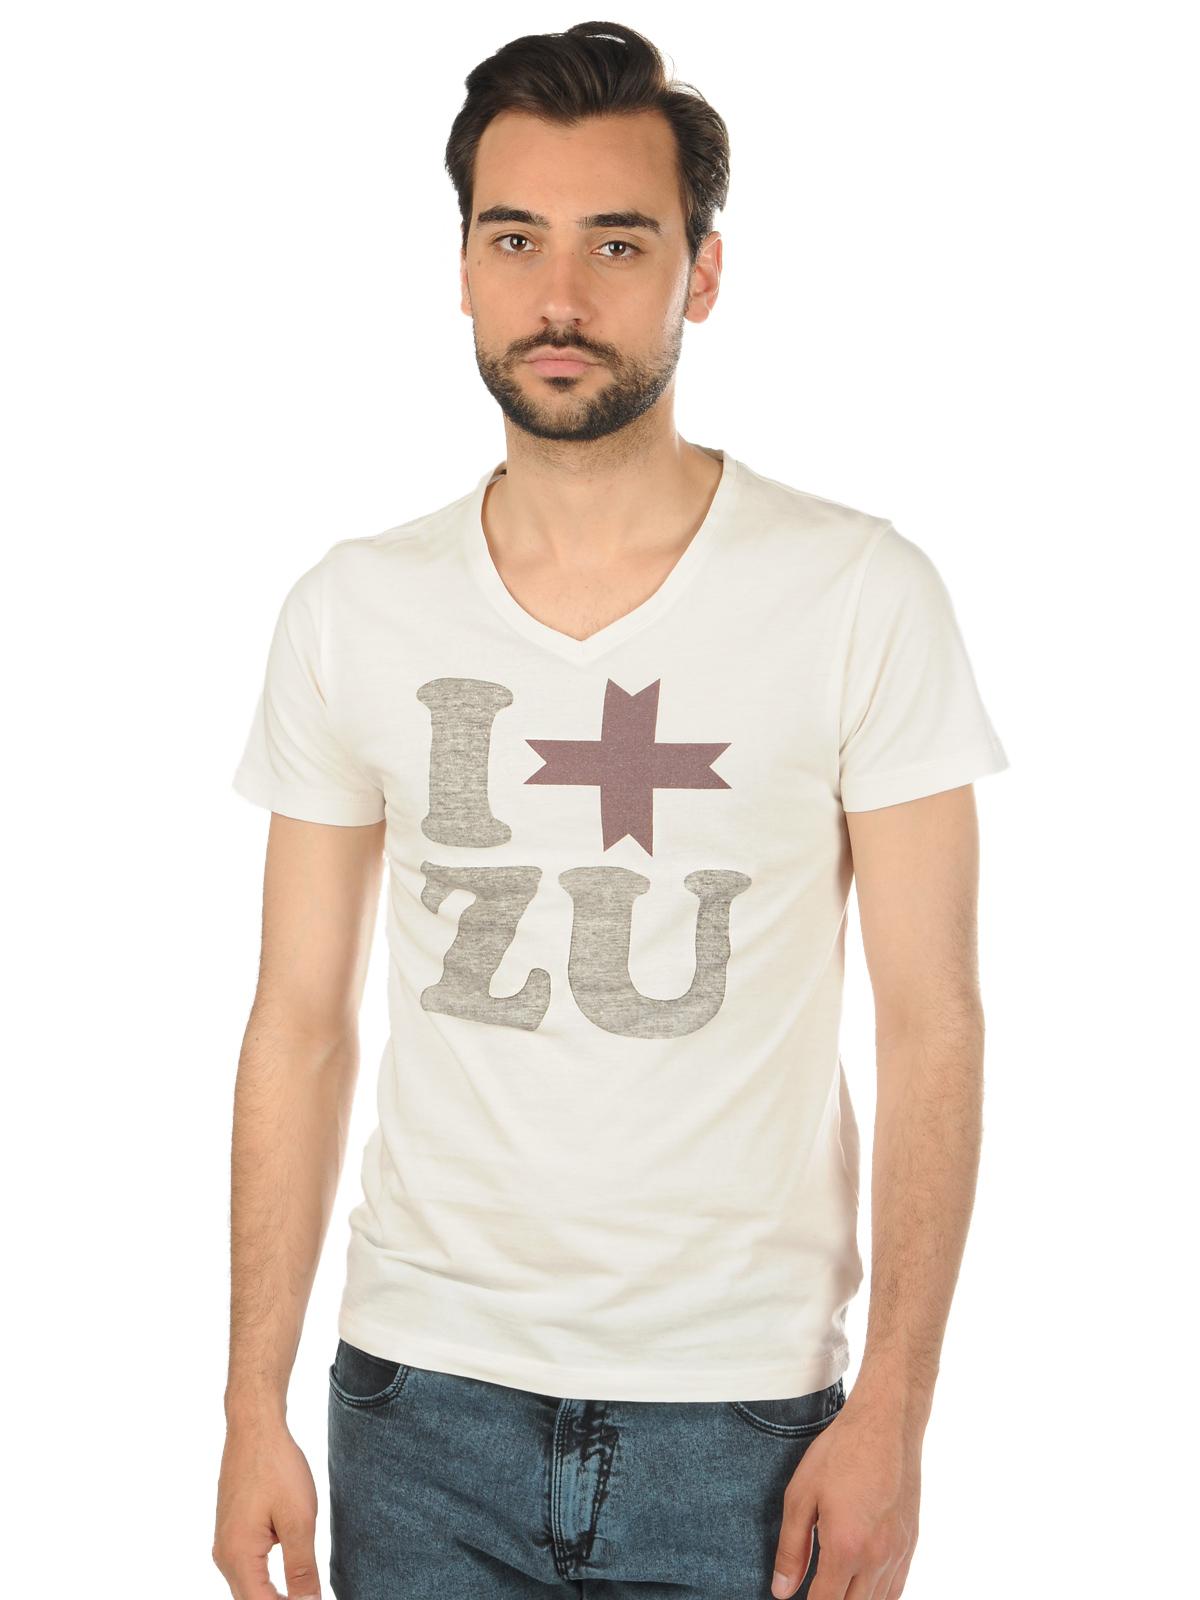 Foto Zu Elements Camiseta crema combinado XL